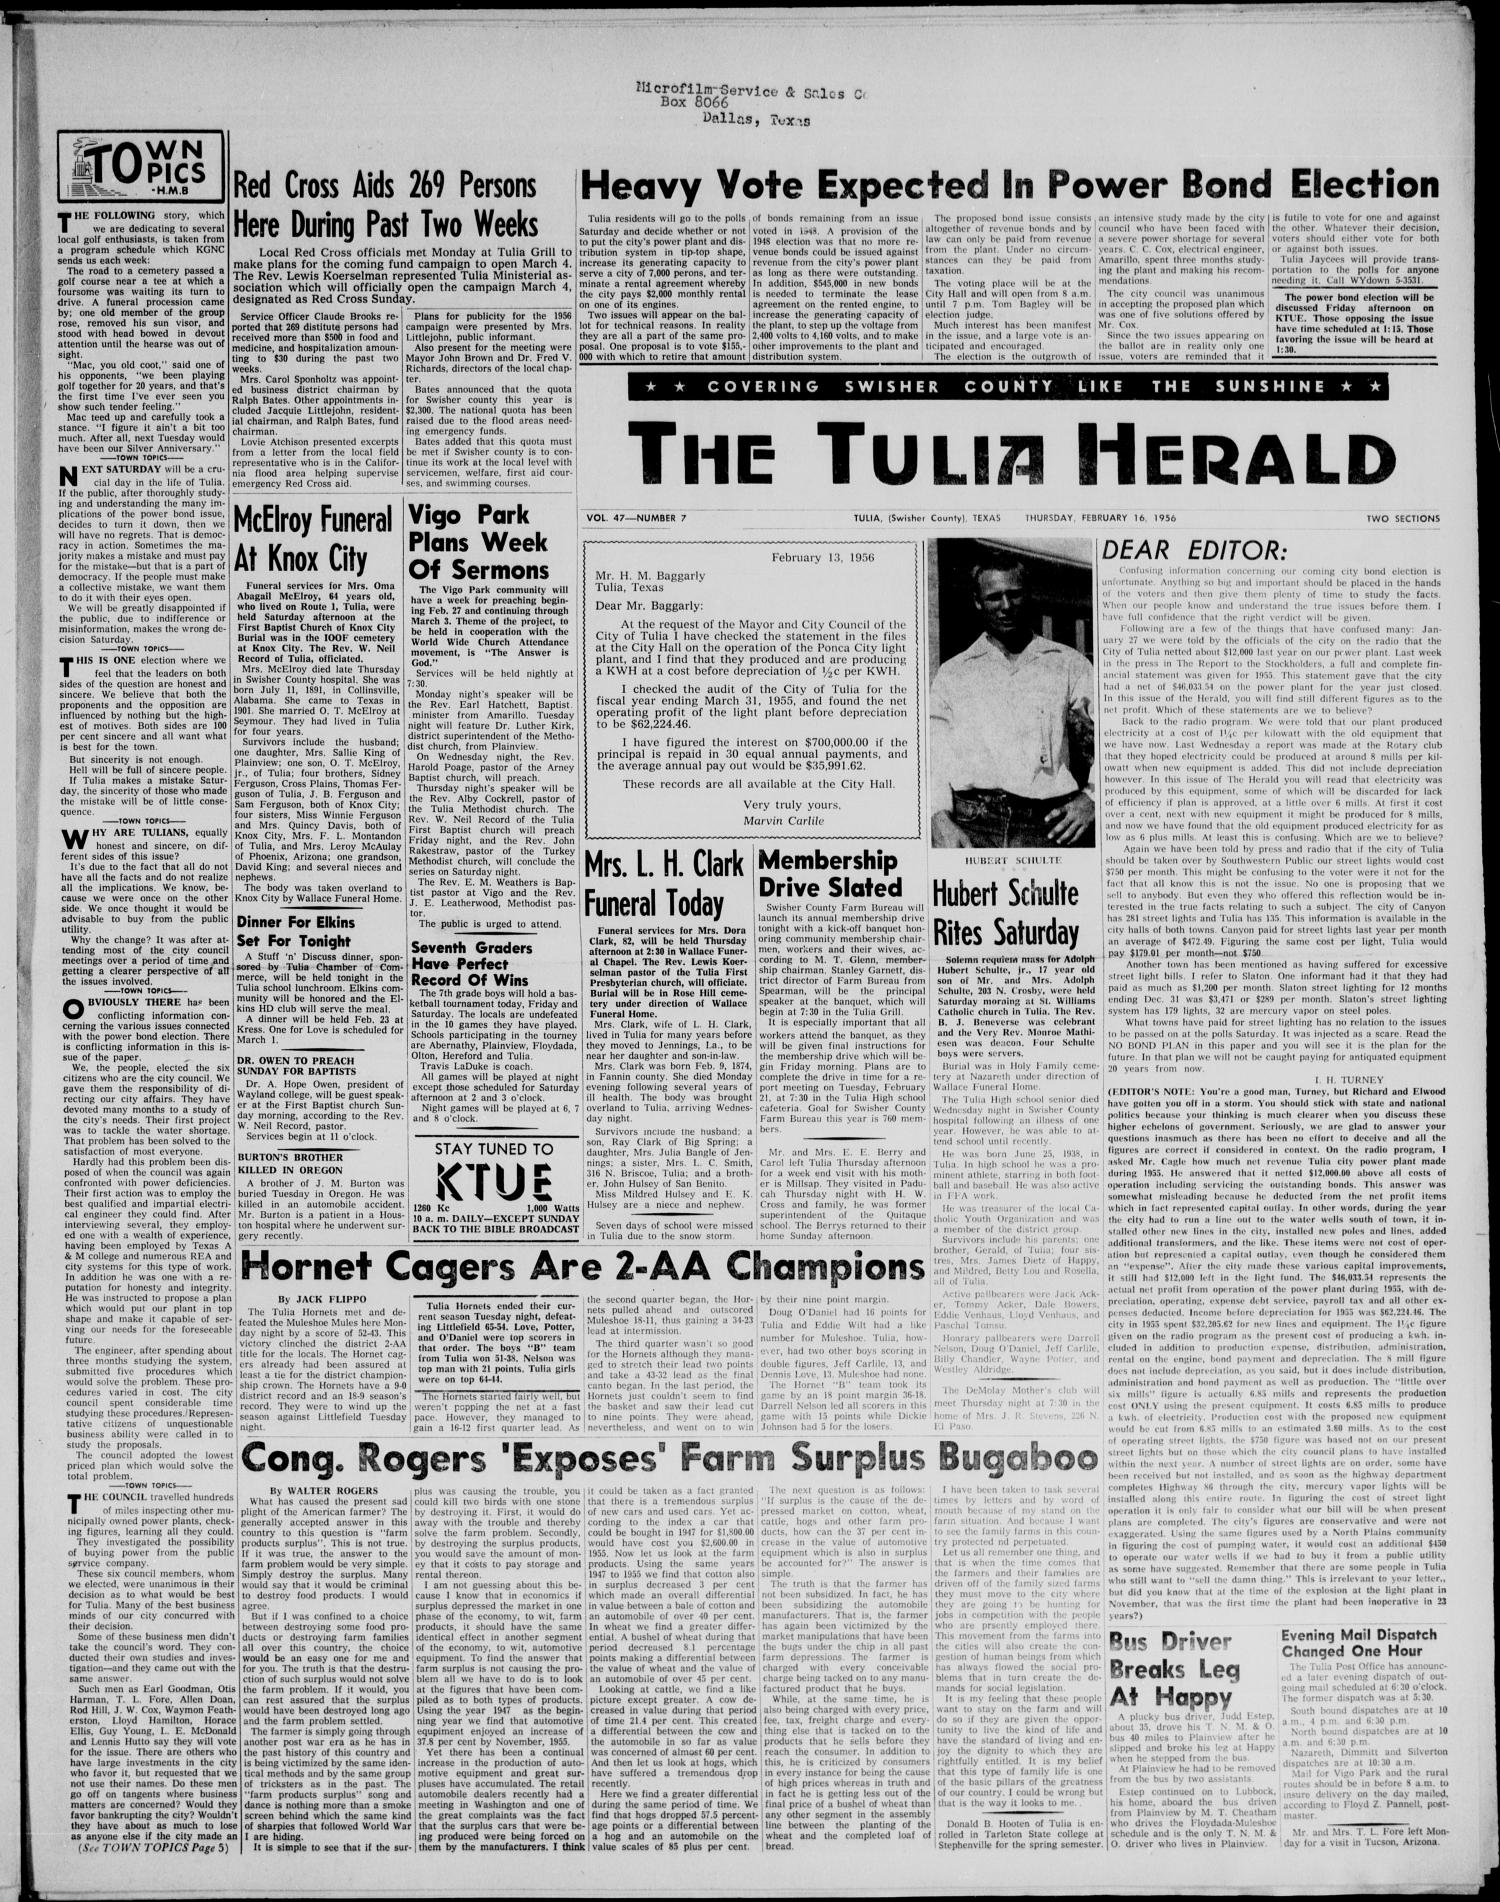 The Tulia Herald (Tulia, Tex), Vol. 47, No. 7, Ed. 1, Thursday, February 16, 1956
                                                
                                                    1
                                                